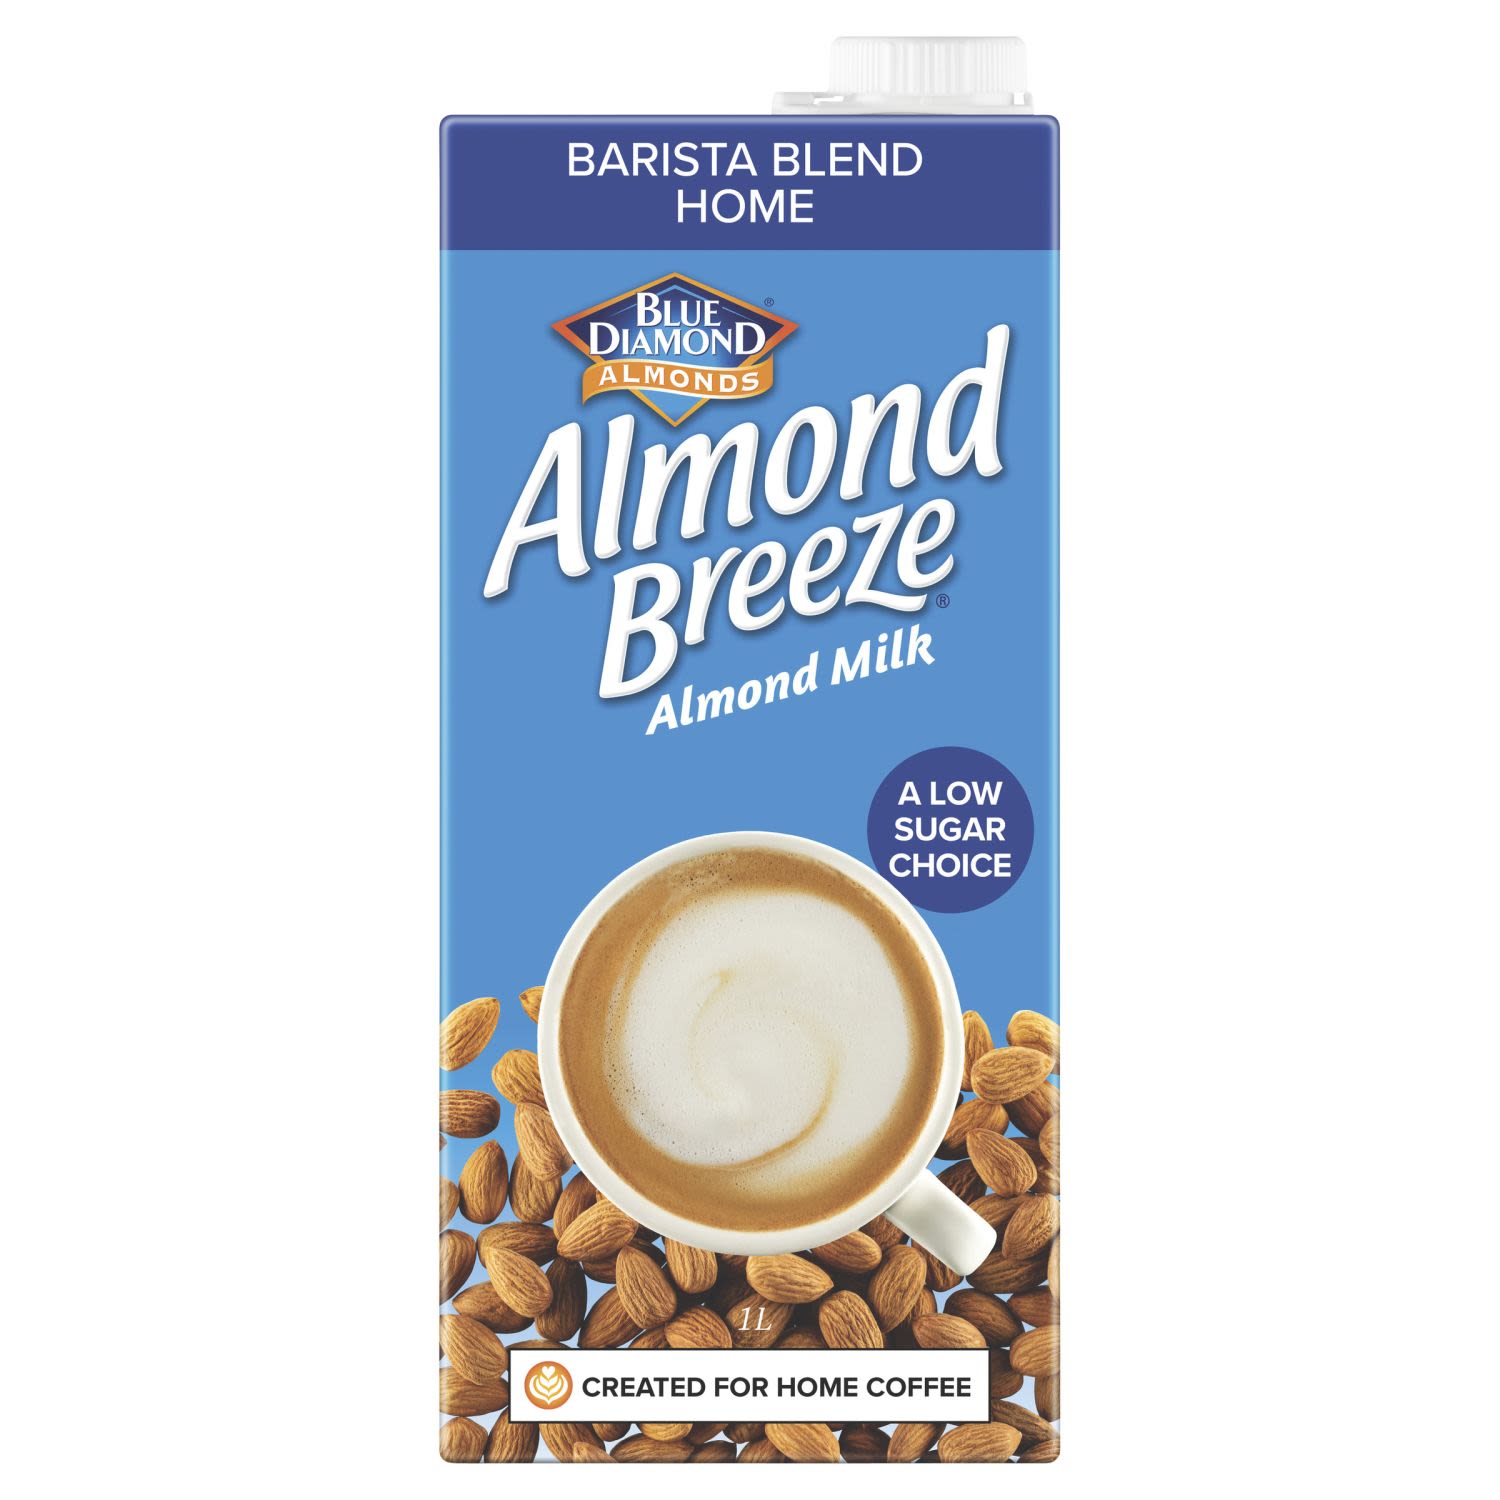 Blue Diamond Almond Breeze Almond Milk Barista Blend Home, 1 Litre